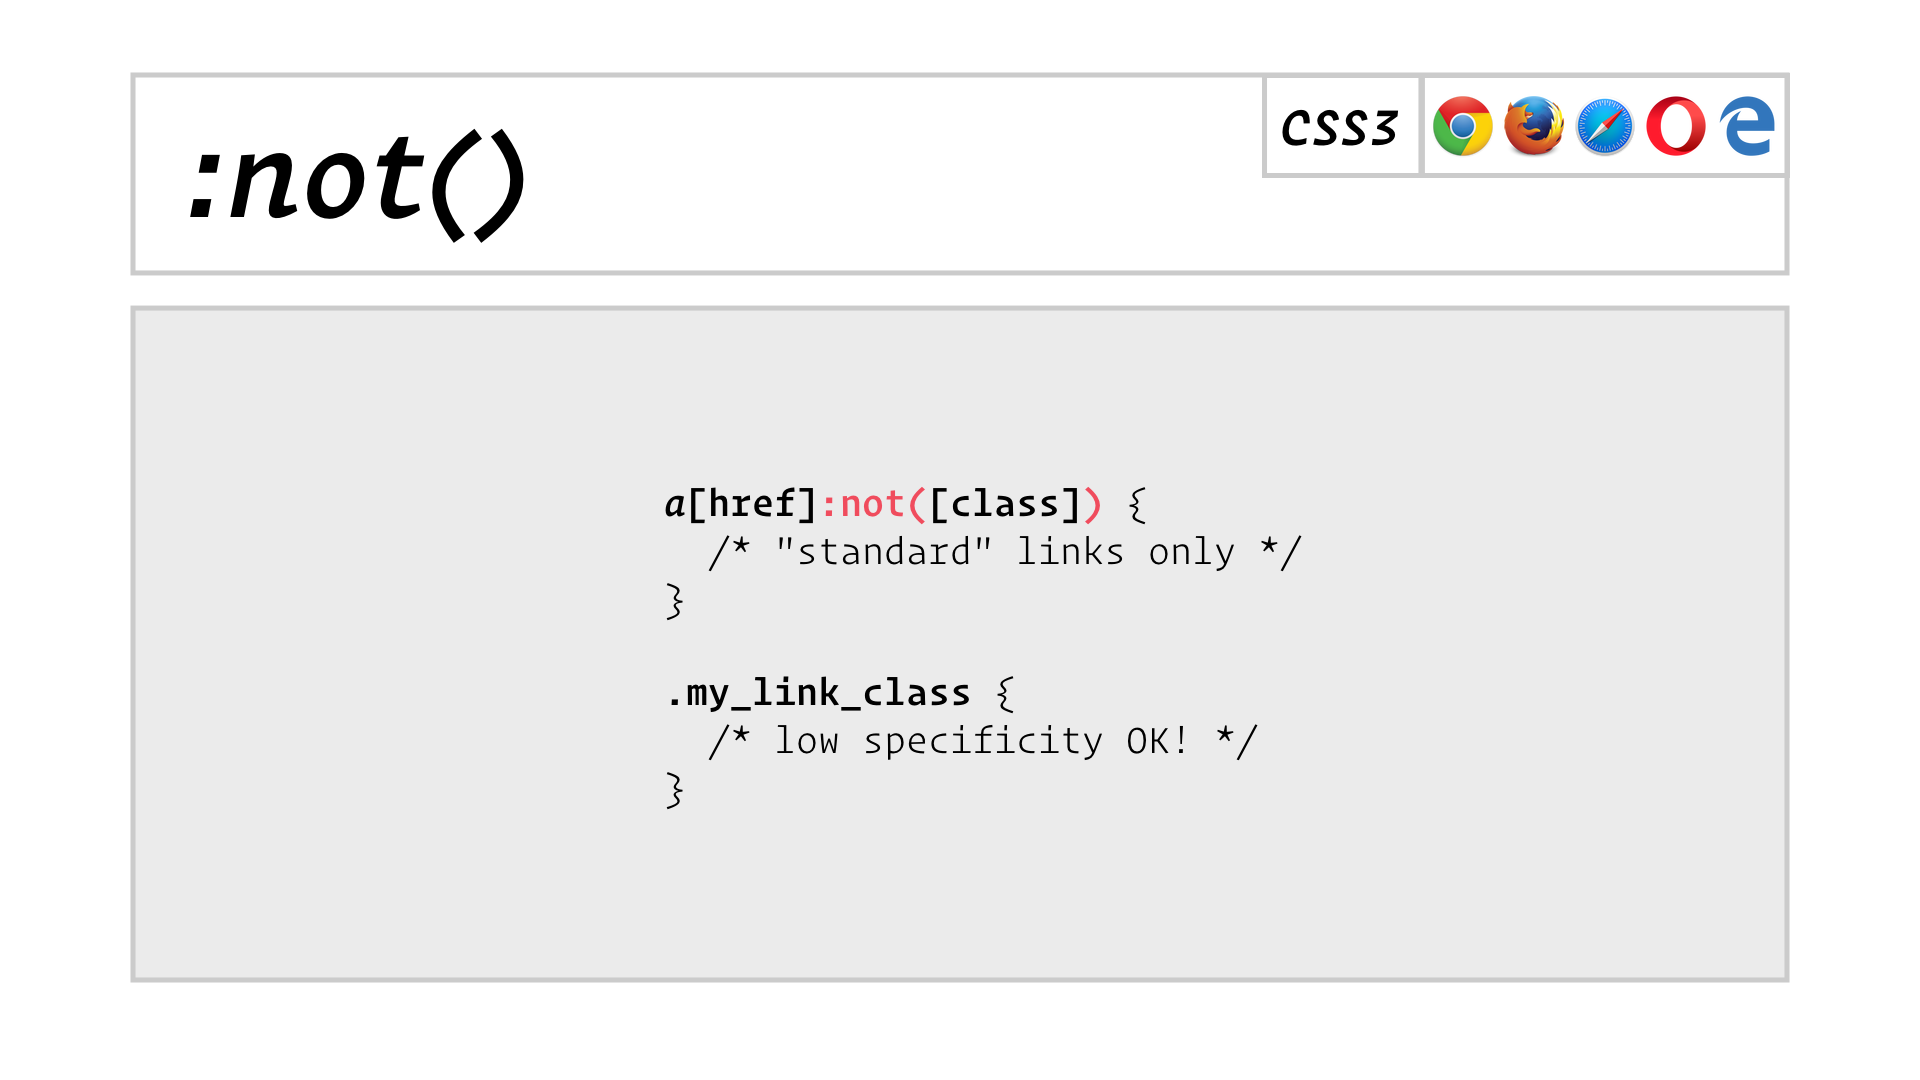 slide: a[href]:not([class]) matches standard links only, .my_link_class can then match links with a class